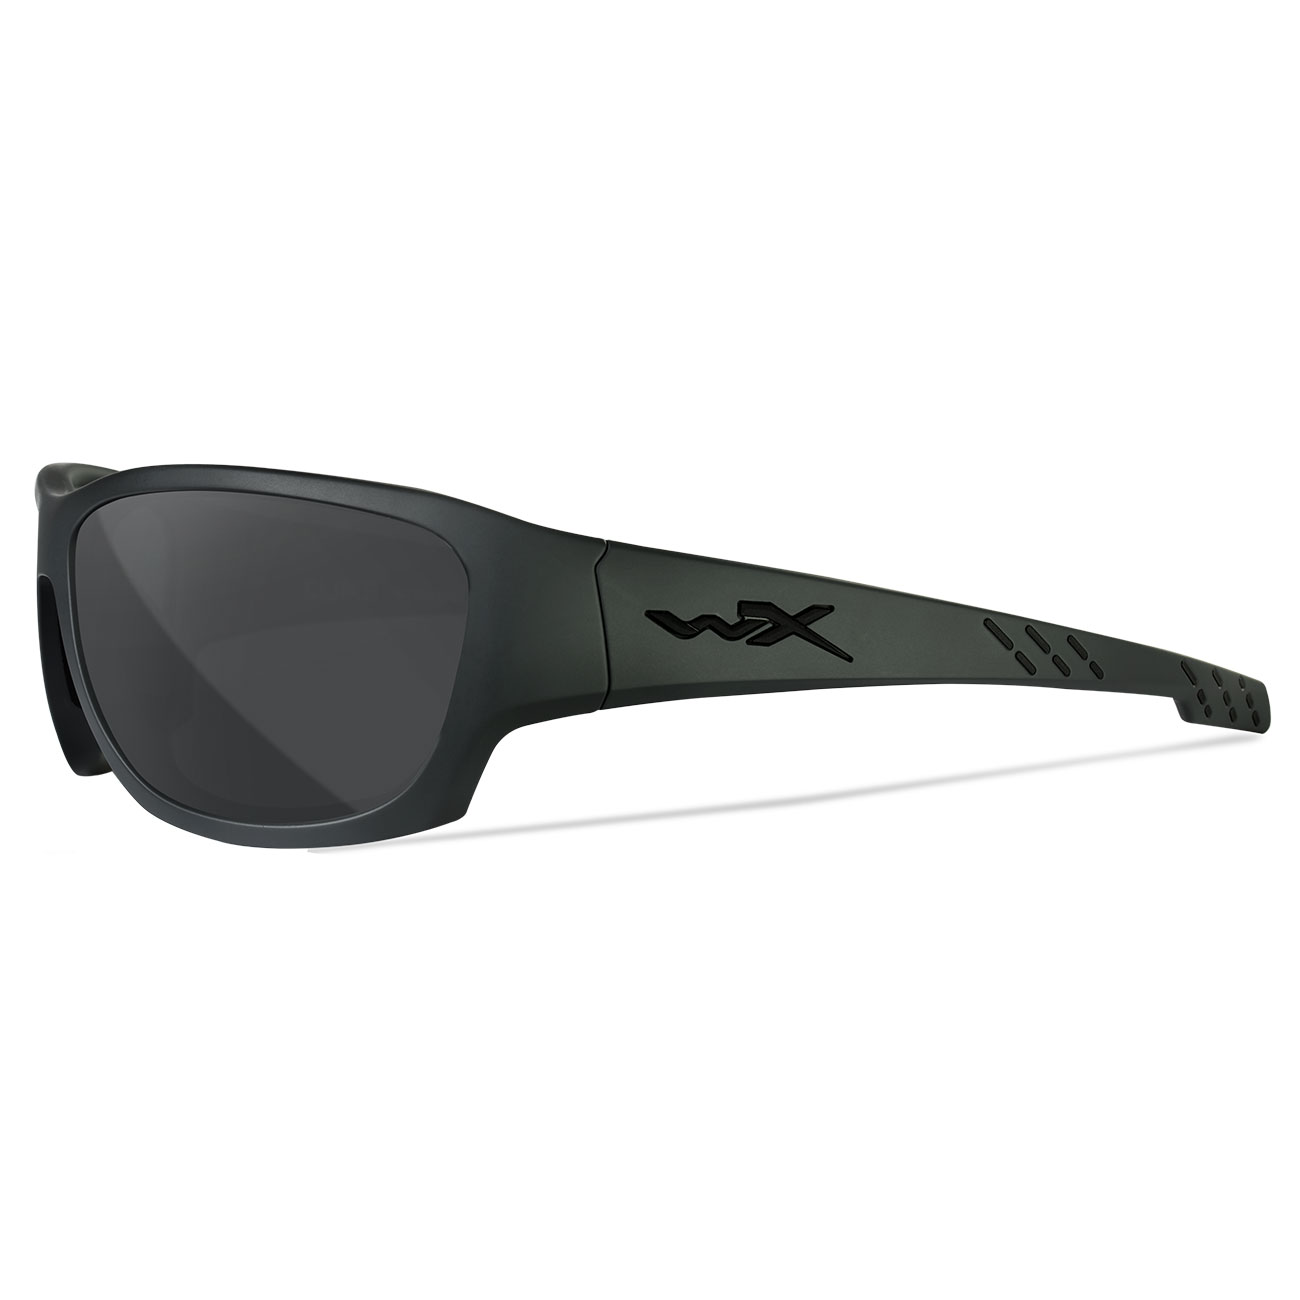 Wiley X Sonnenbrille Climb matt schwarz Glser grau inkl. Brillenetui Bild 2